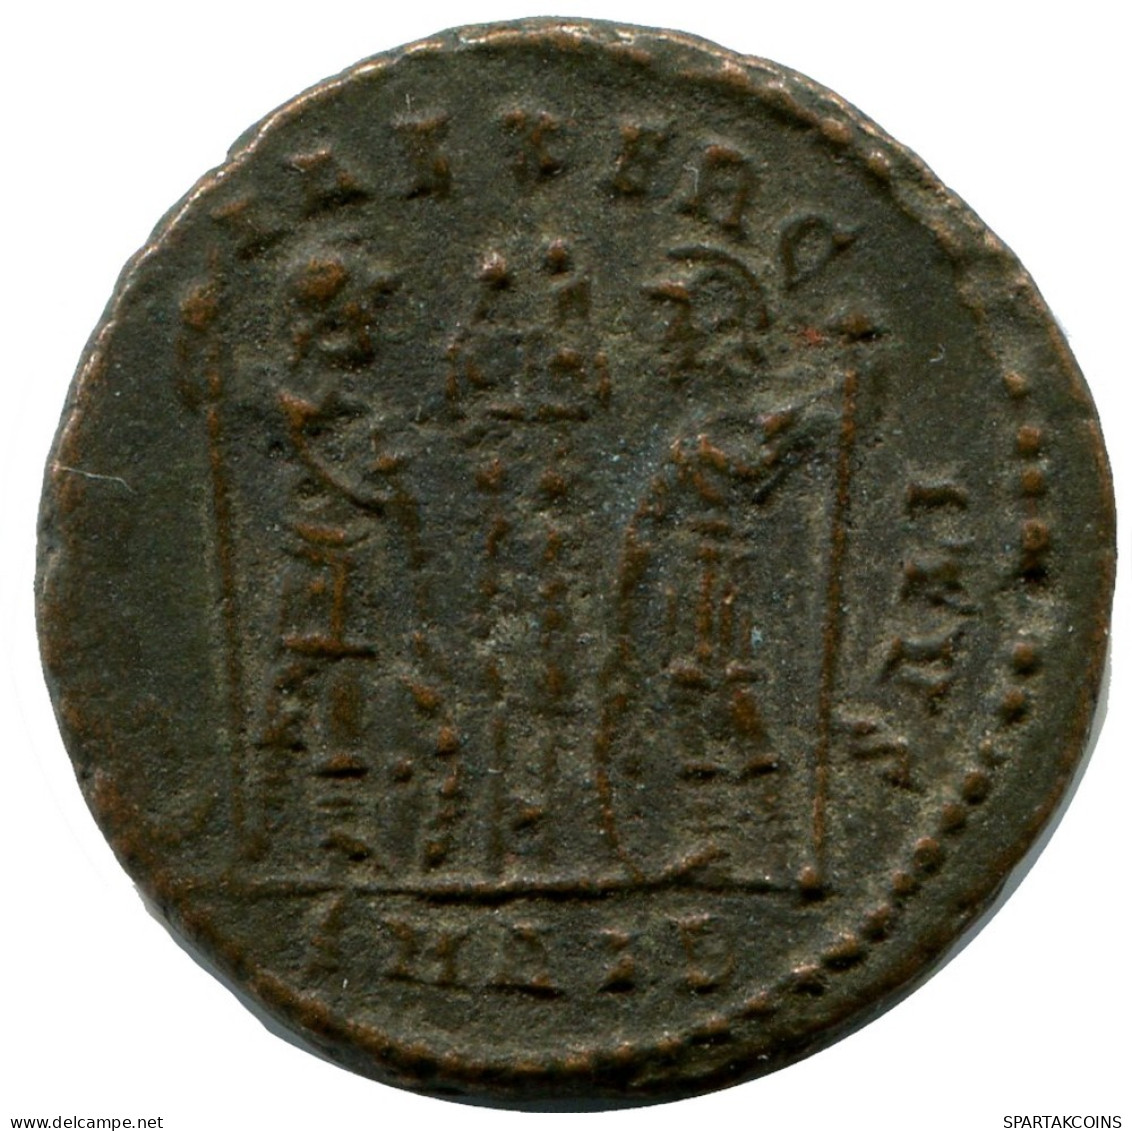 CONSTANTIUS II ALEKSANDRIA FROM THE ROYAL ONTARIO MUSEUM #ANC10470.14.E.A - L'Empire Chrétien (307 à 363)